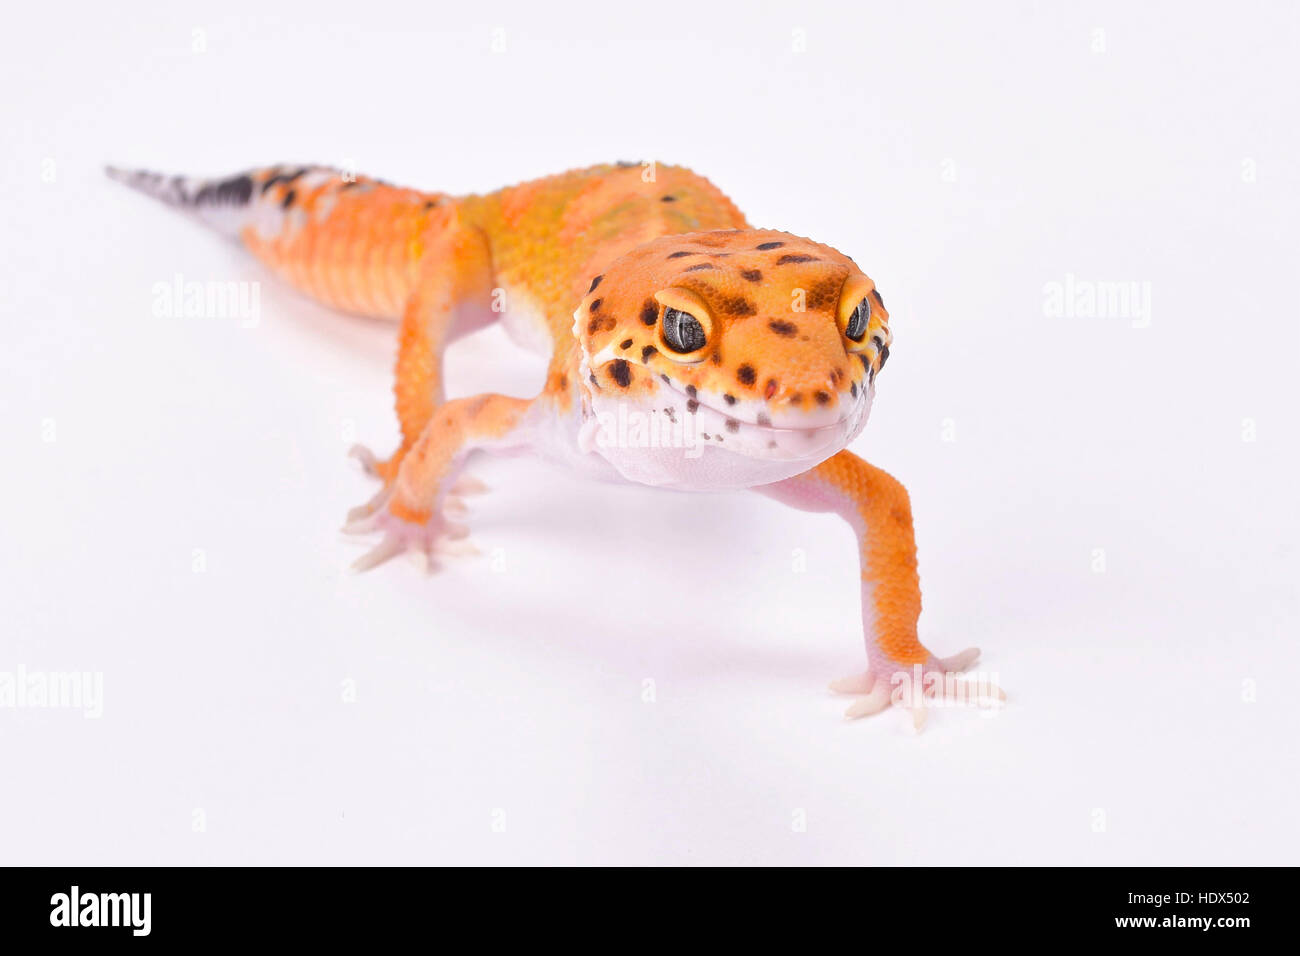 Leopard gecko,Eublepharis macularius Stock Photo